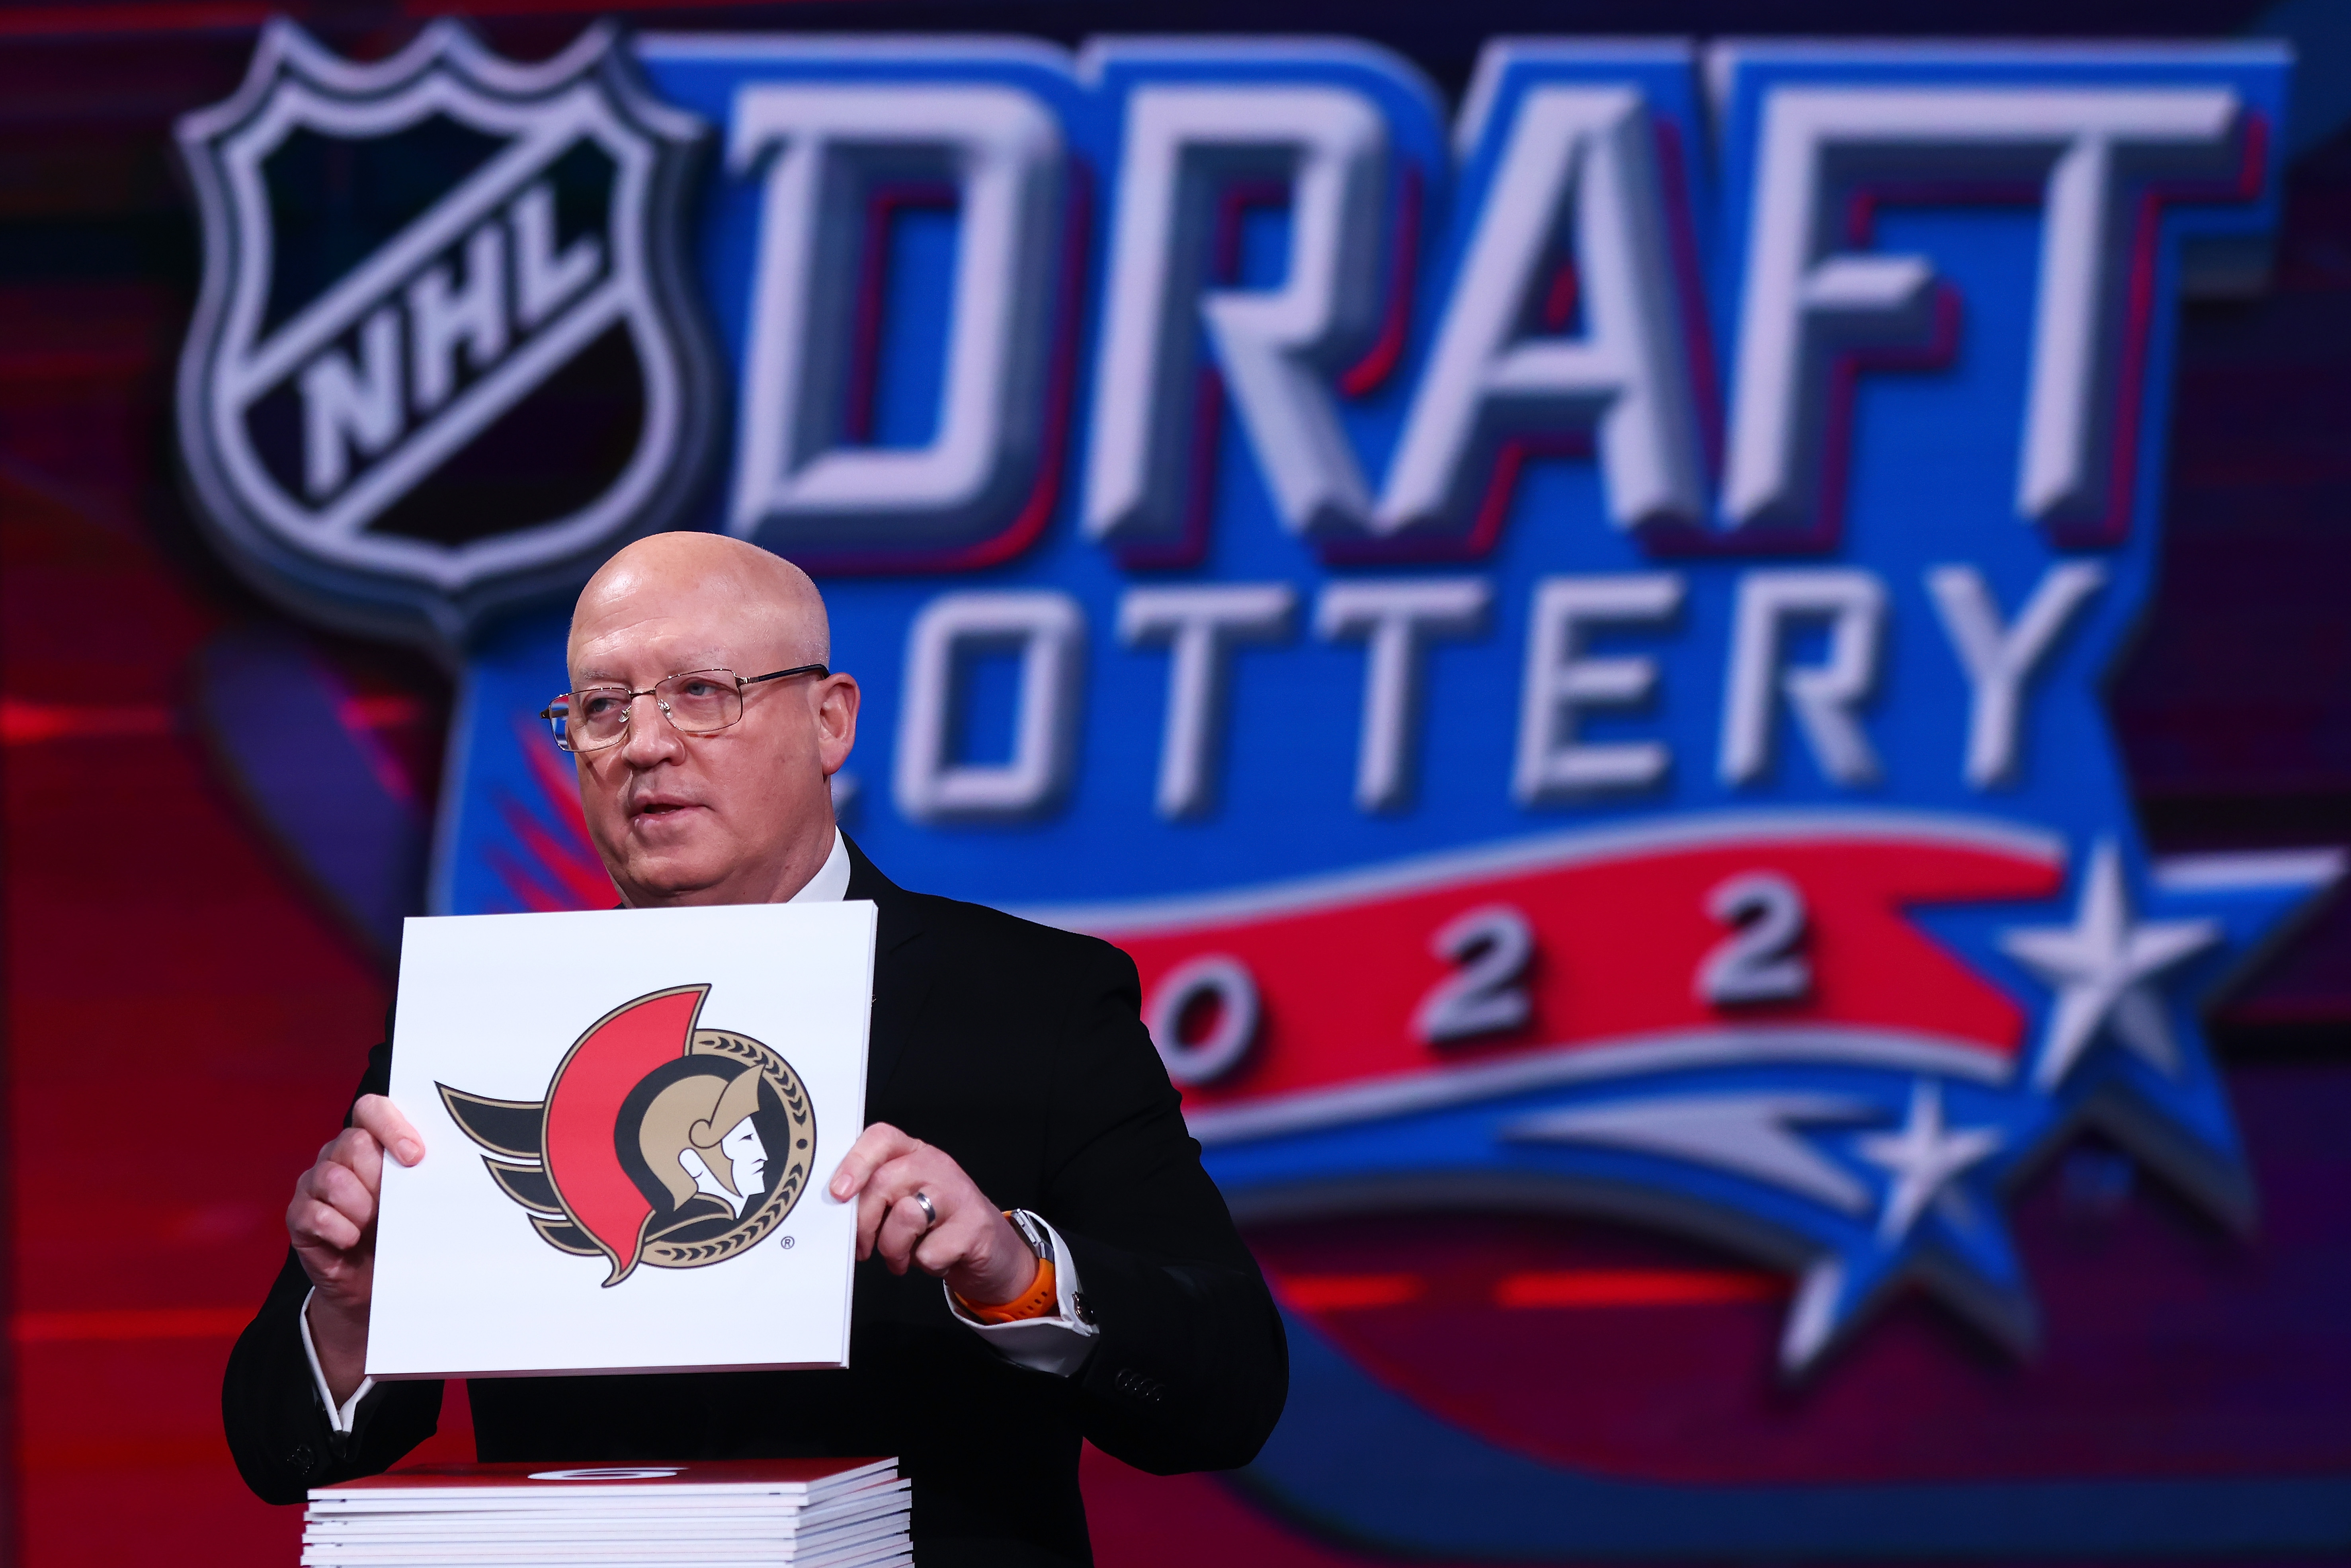 2022 NHL Draft Lottery